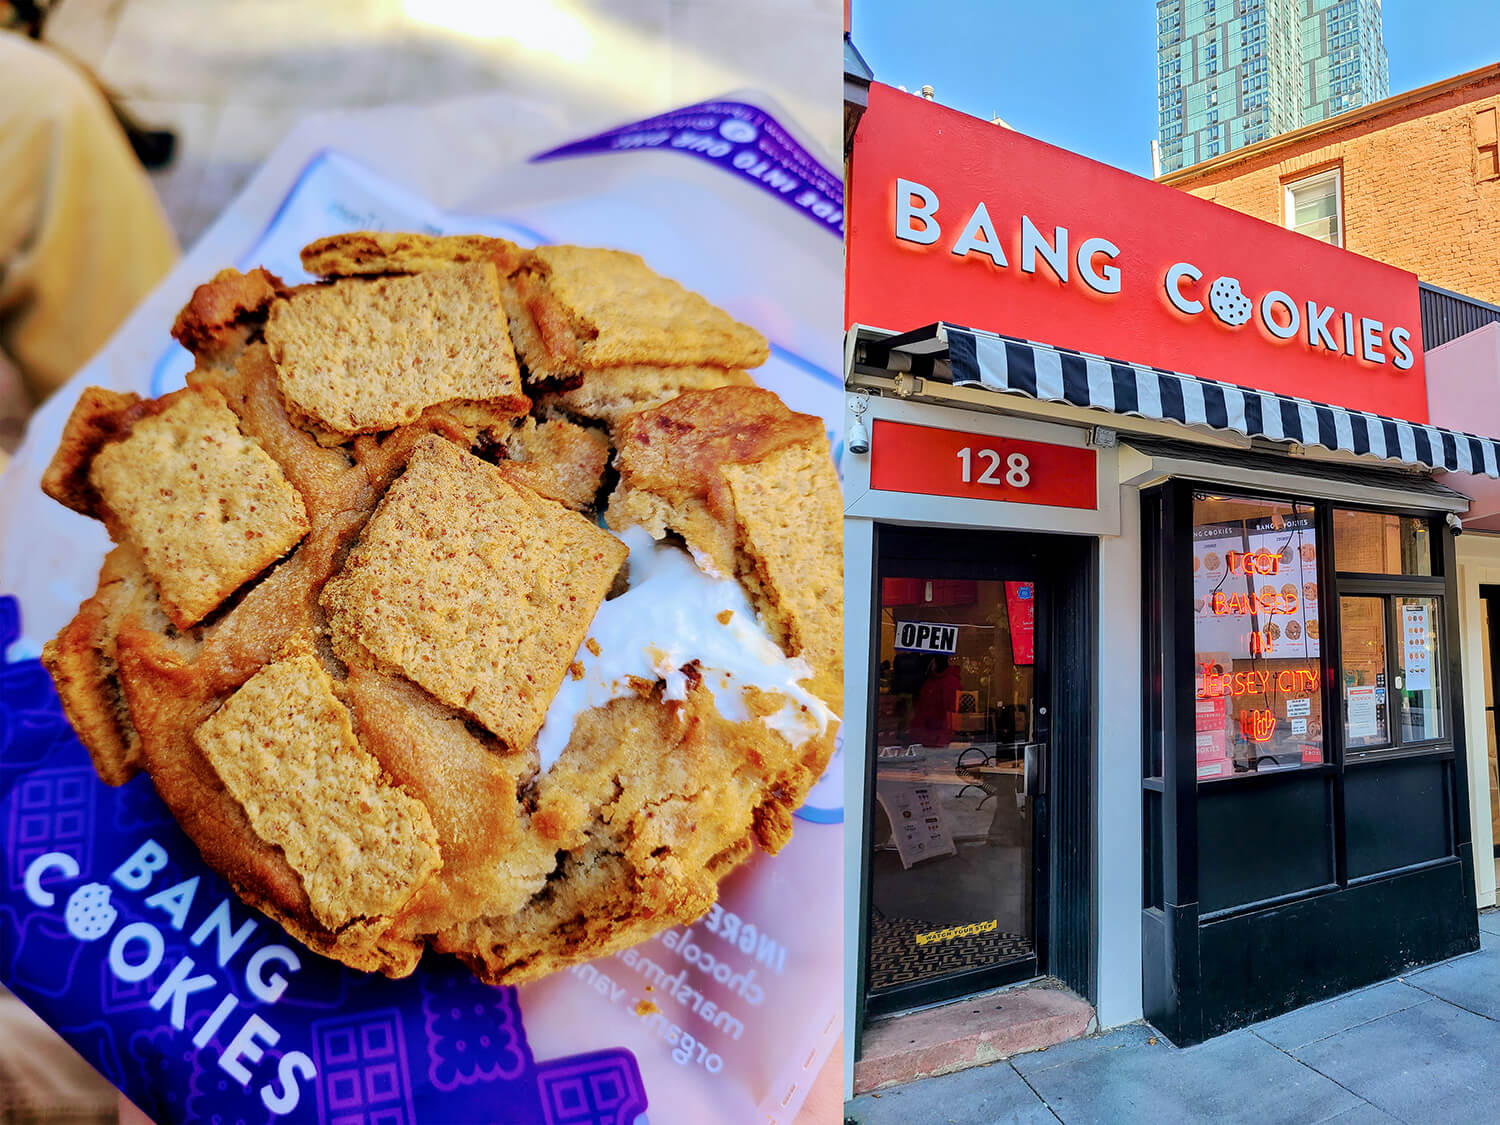 Bang Cookies (NJ) - S’mores Cookie